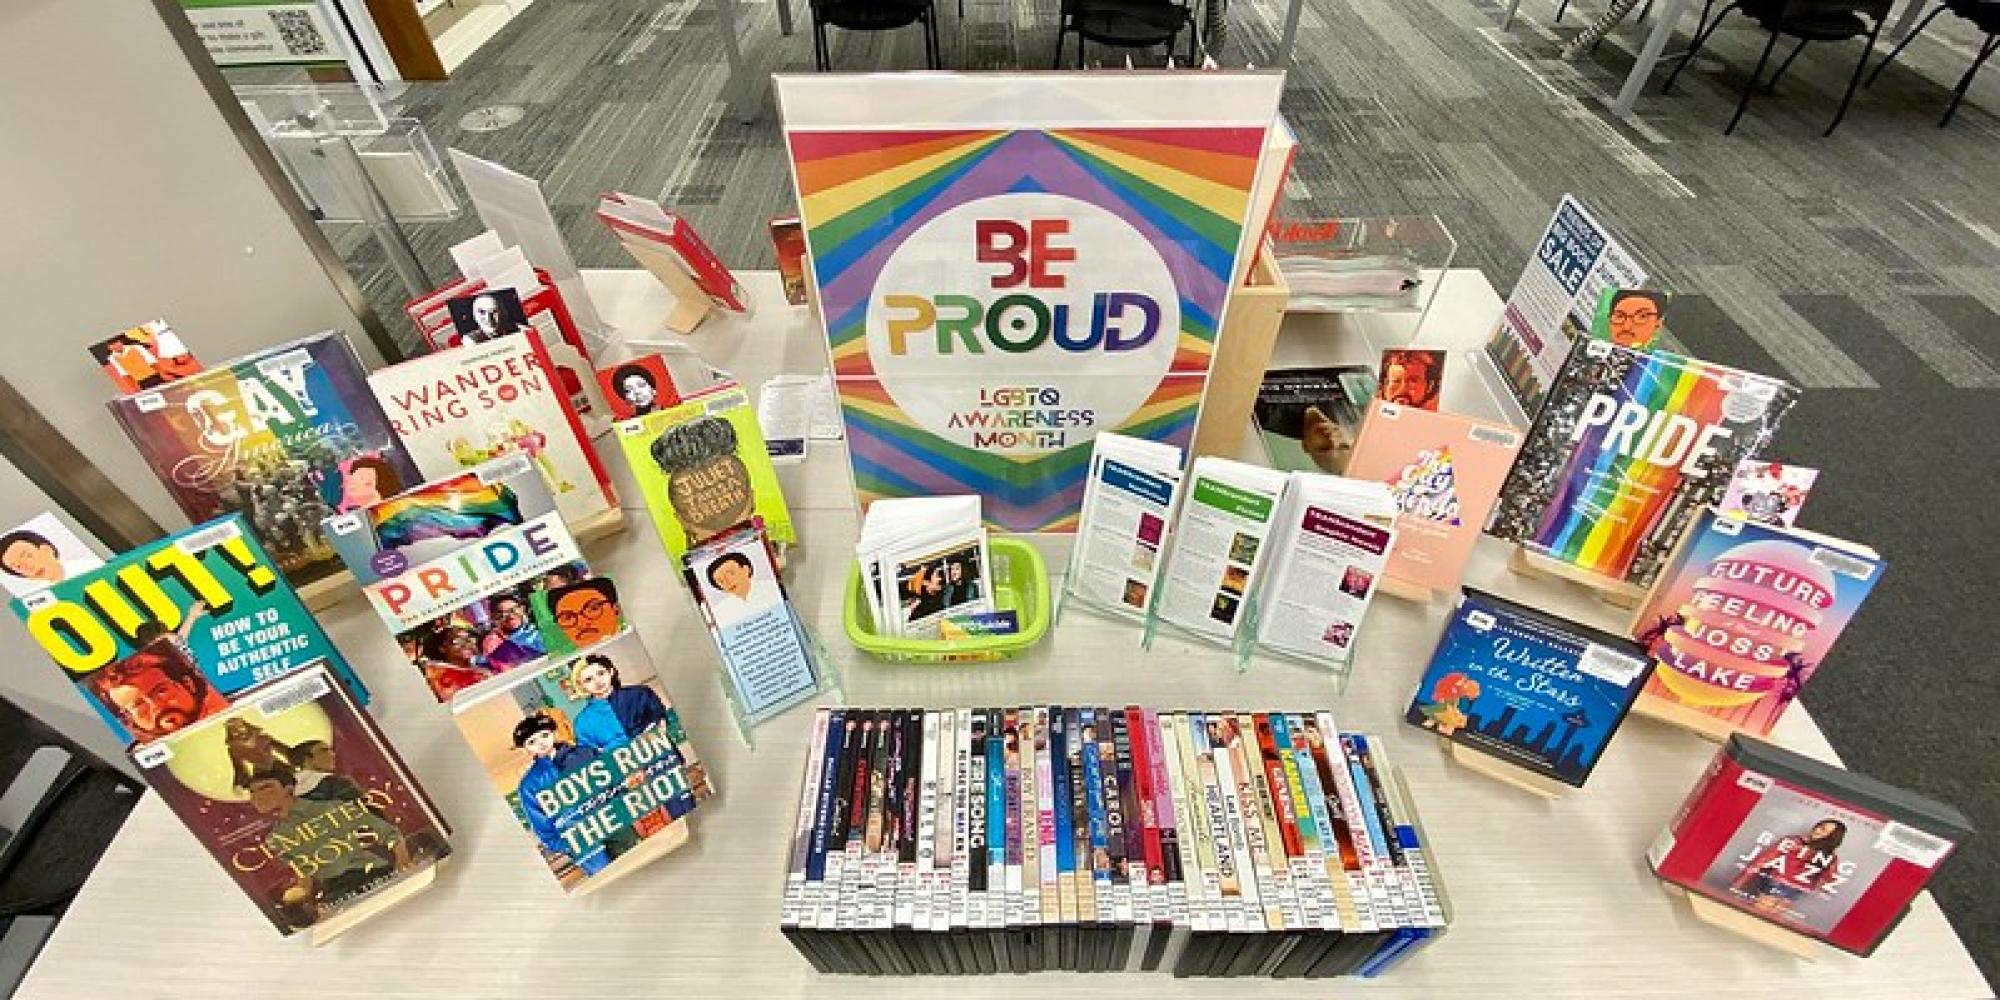 LGBTQ Pride Book Display at Madison Public Library